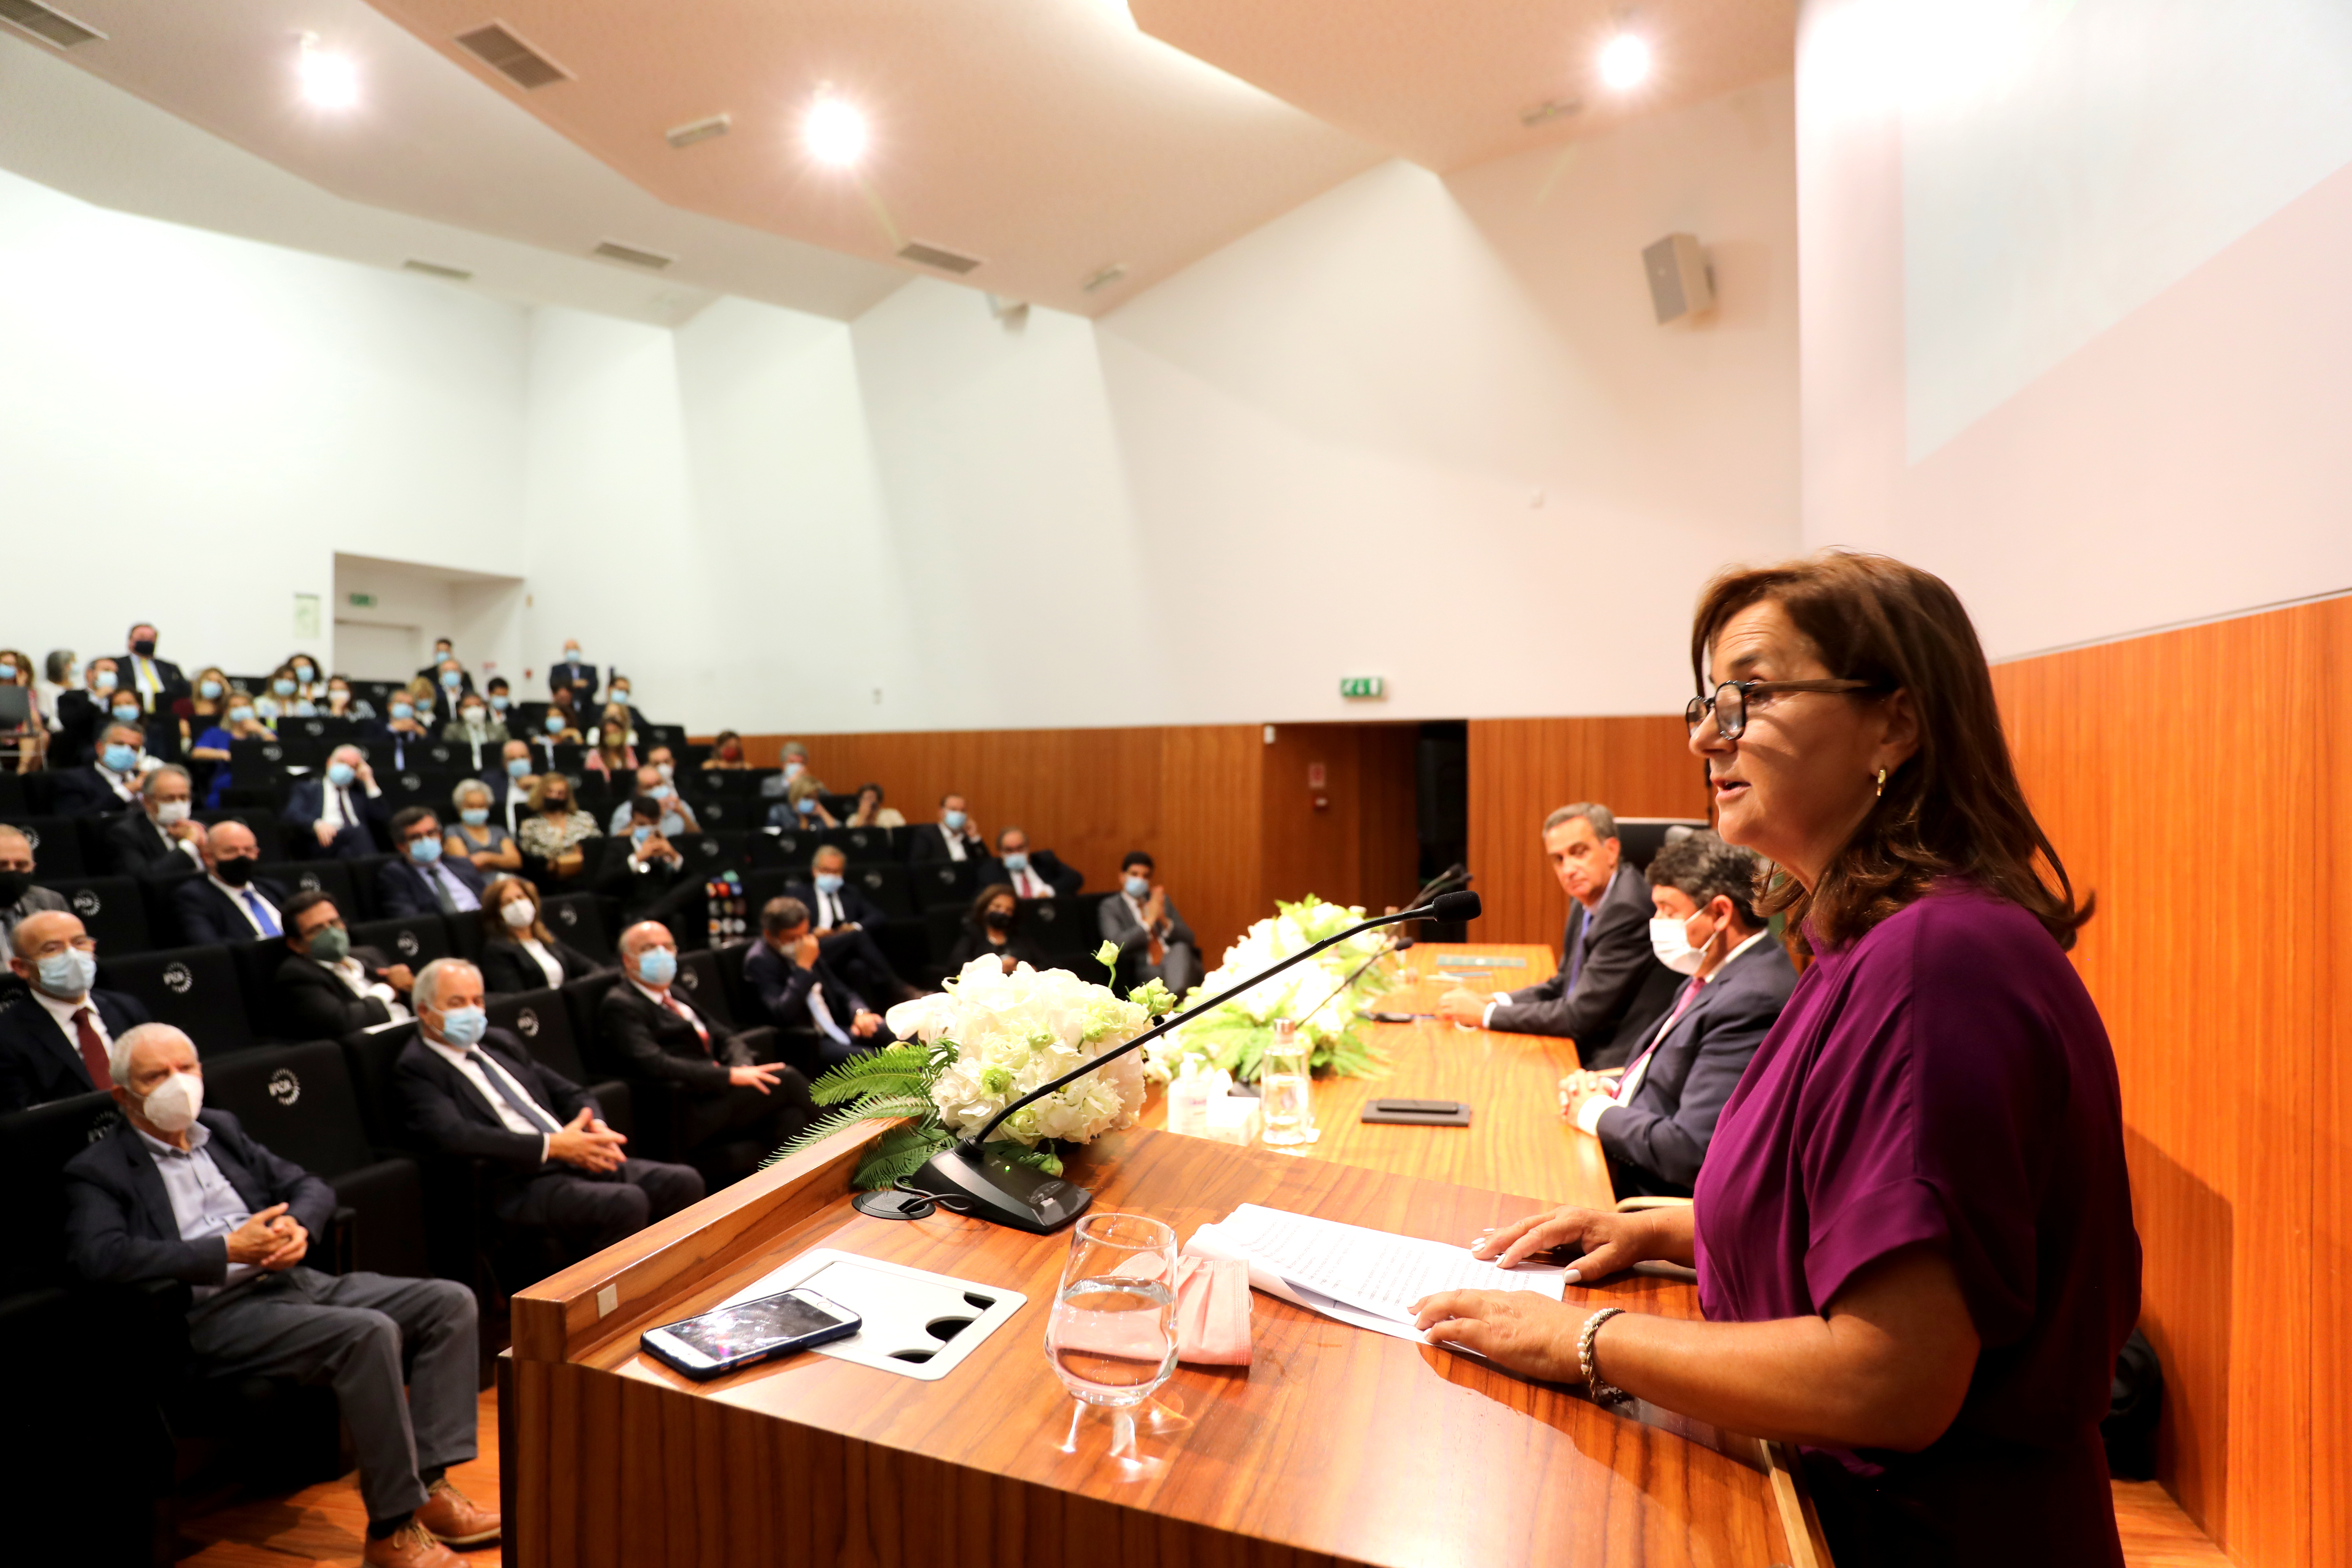 Tomada de posse de Maria José Fernandes como Presidente do IPCA